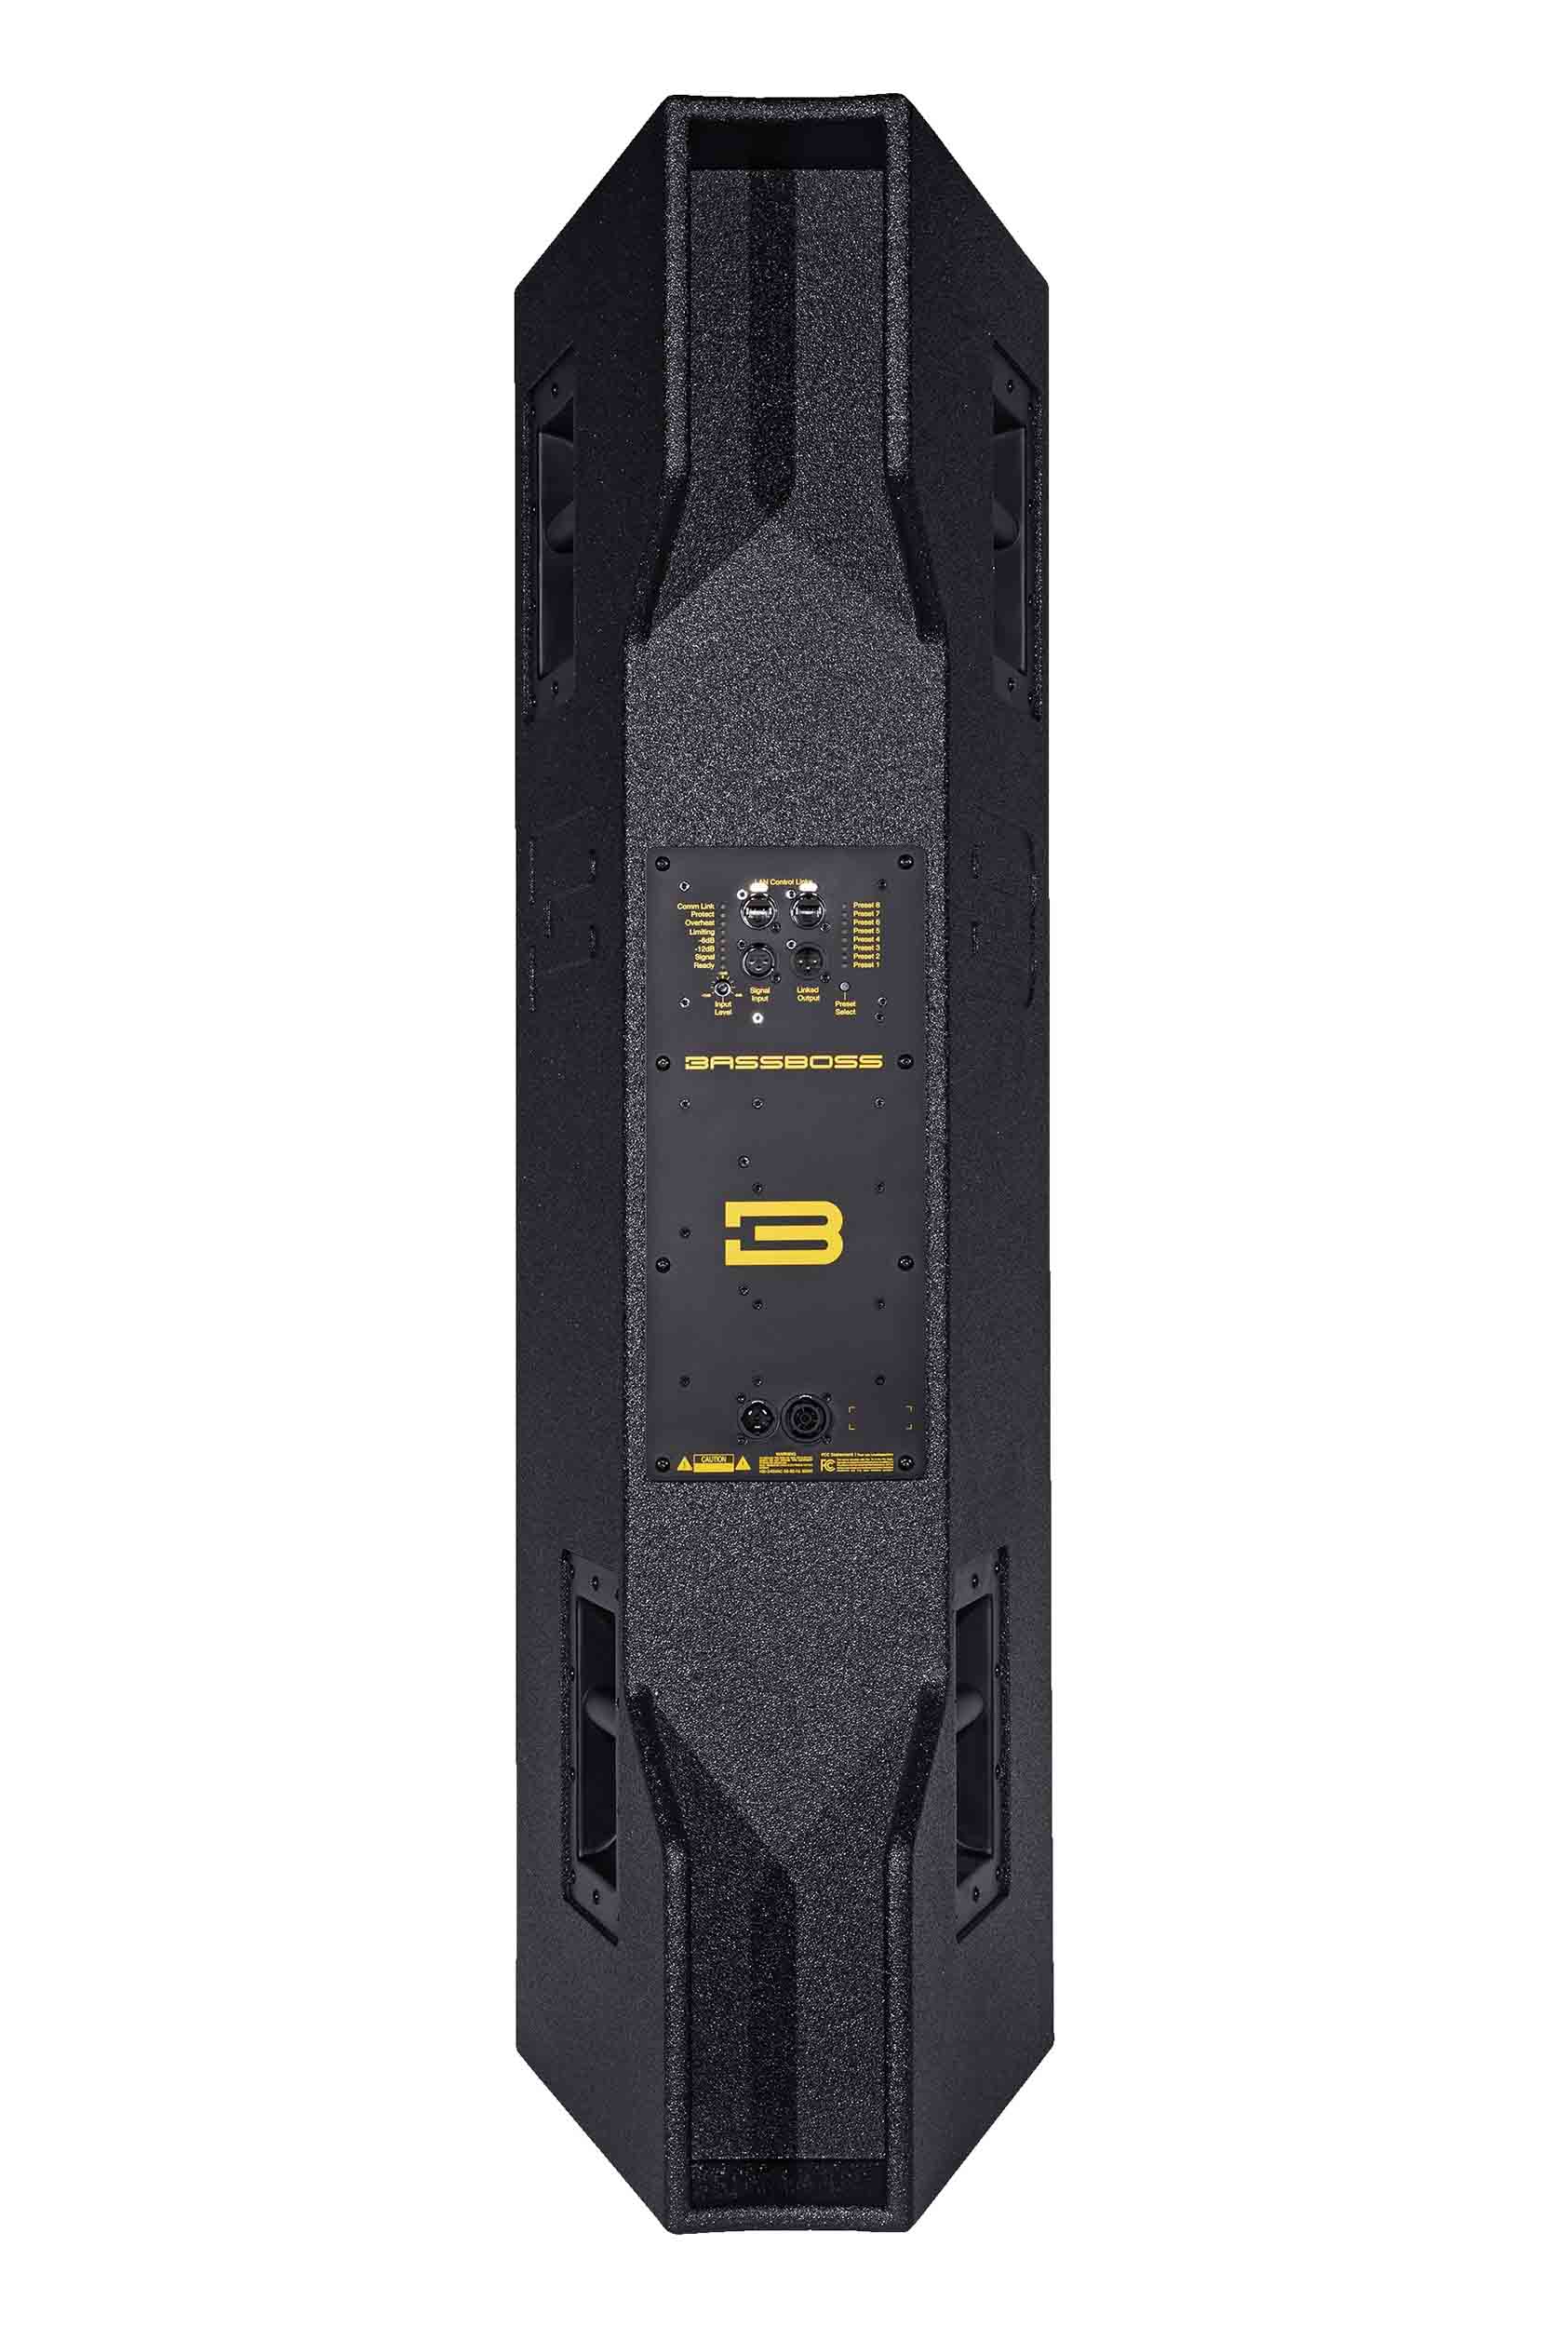 BassBoss BB-AT212-MK3 High-Efficiency 2-Way Bi-Amplified Loudspeaker - Black - Hollywood DJ